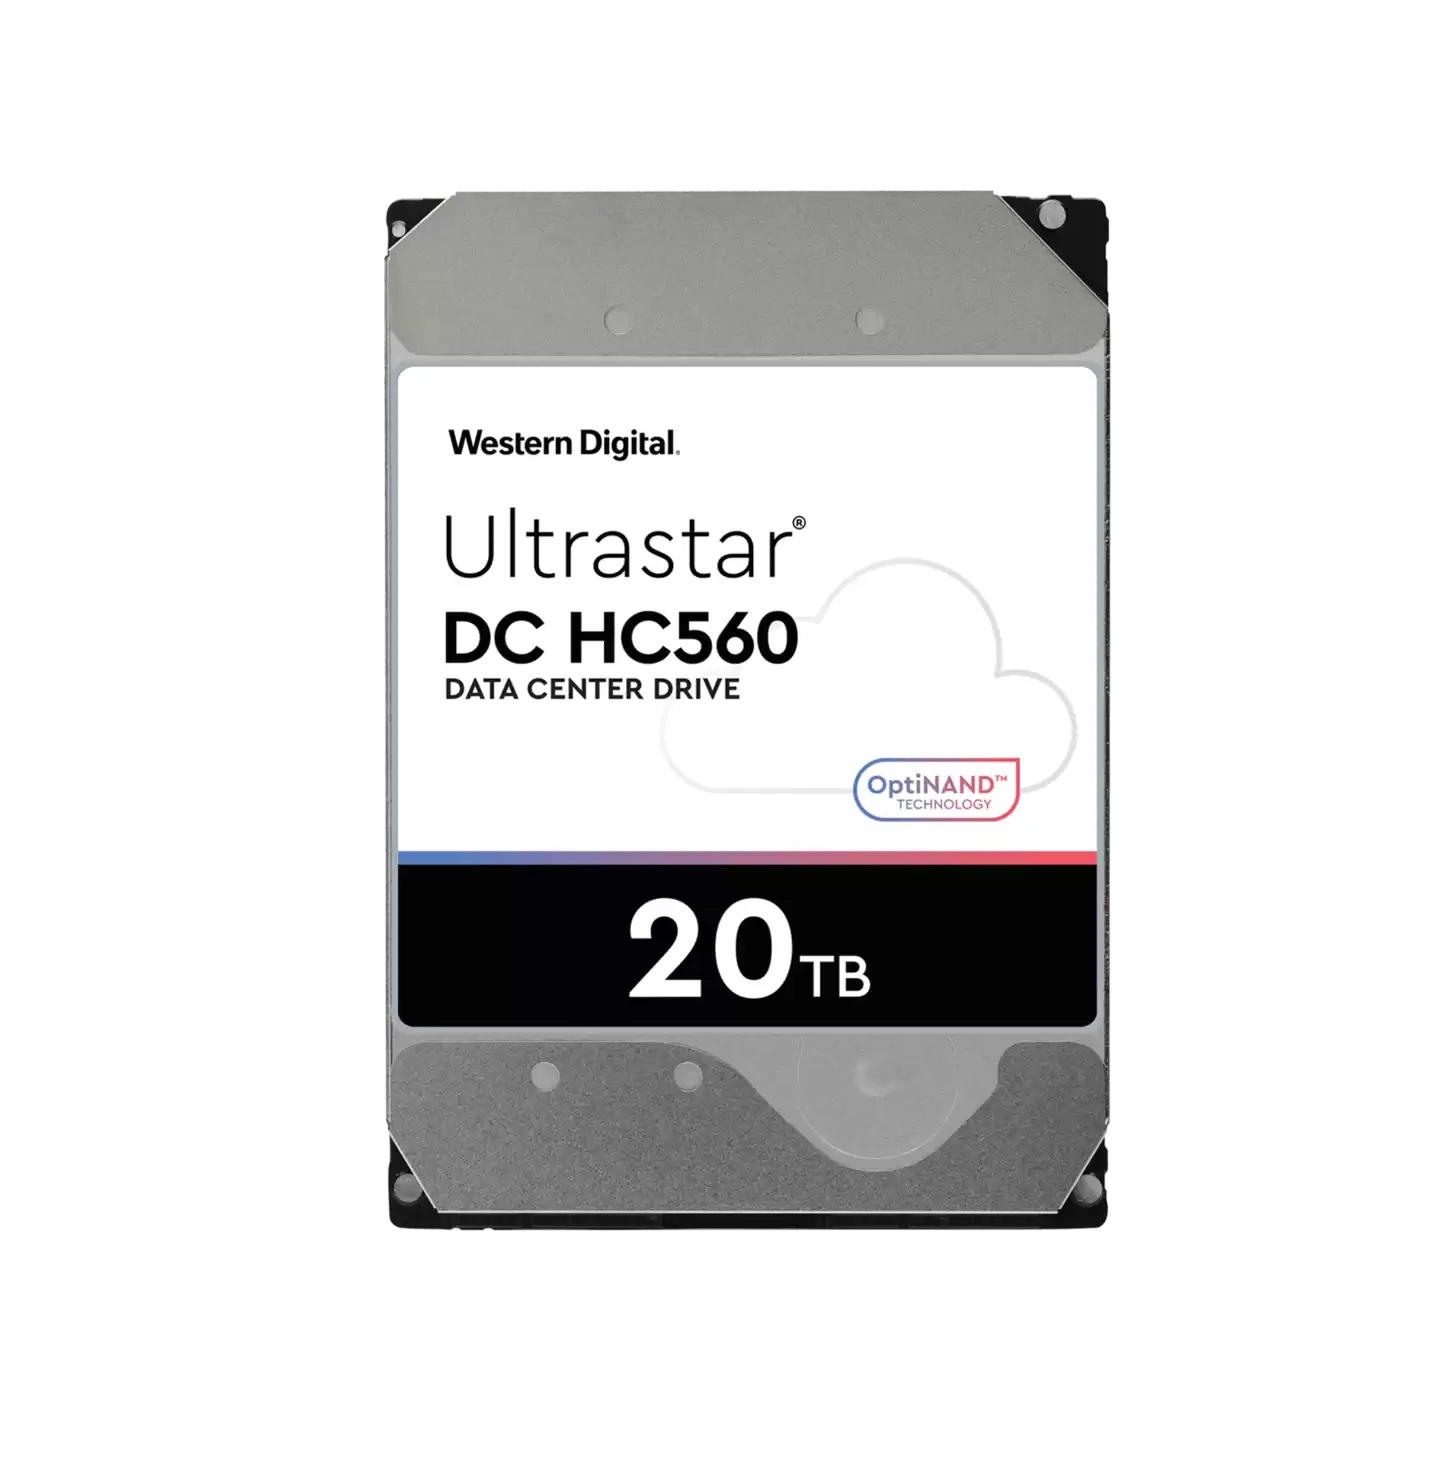 20TB Western Digital Ultrastar DC HC560 (SATA 6Gb/s) WUH722020BLE6L4 512e/4Kn SE #EP